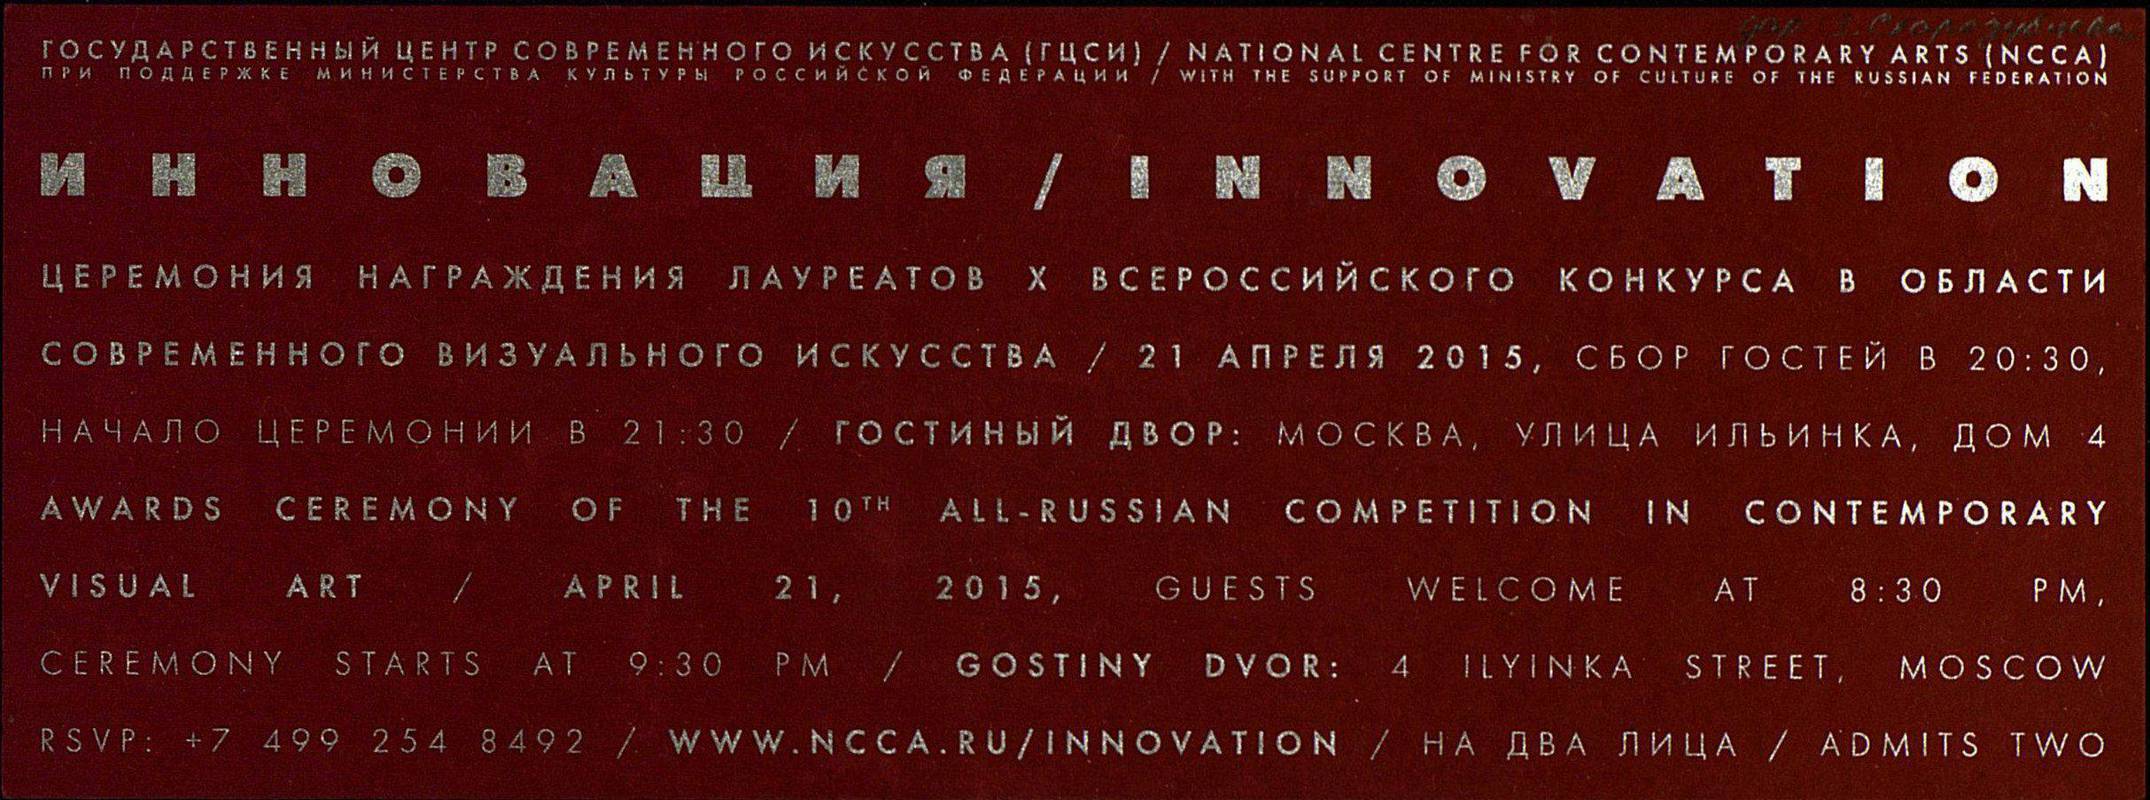 Innovation 2014. Awards Ceremony